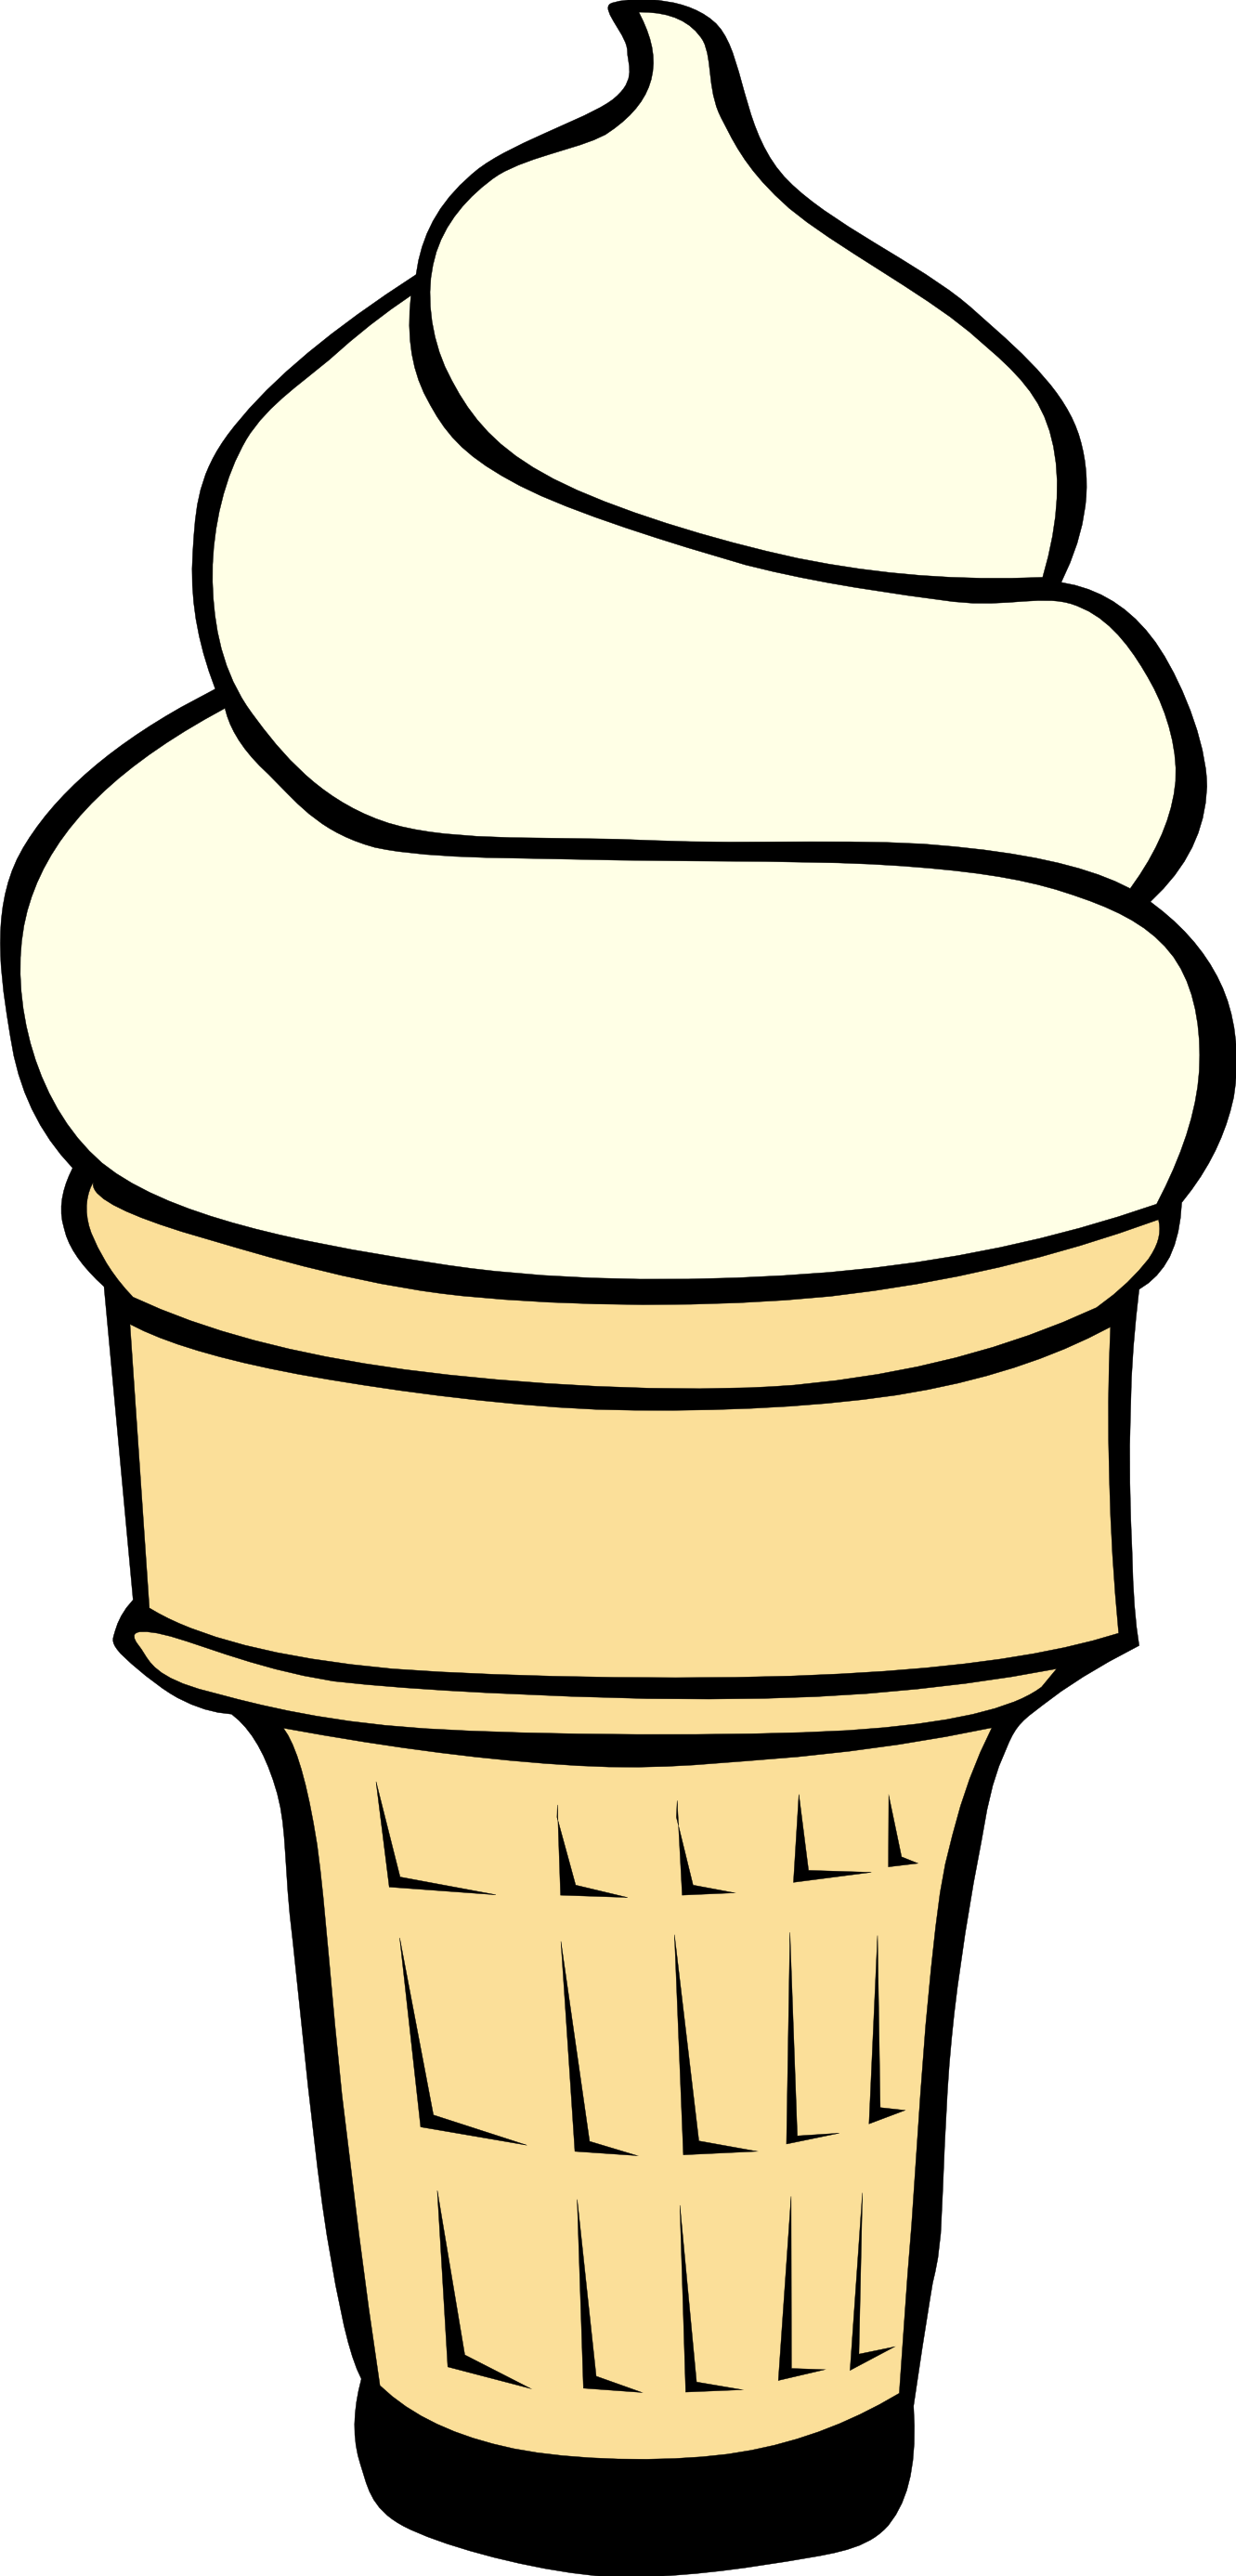 Ice cream clip art | Clipart Panda - Free Clipart Images